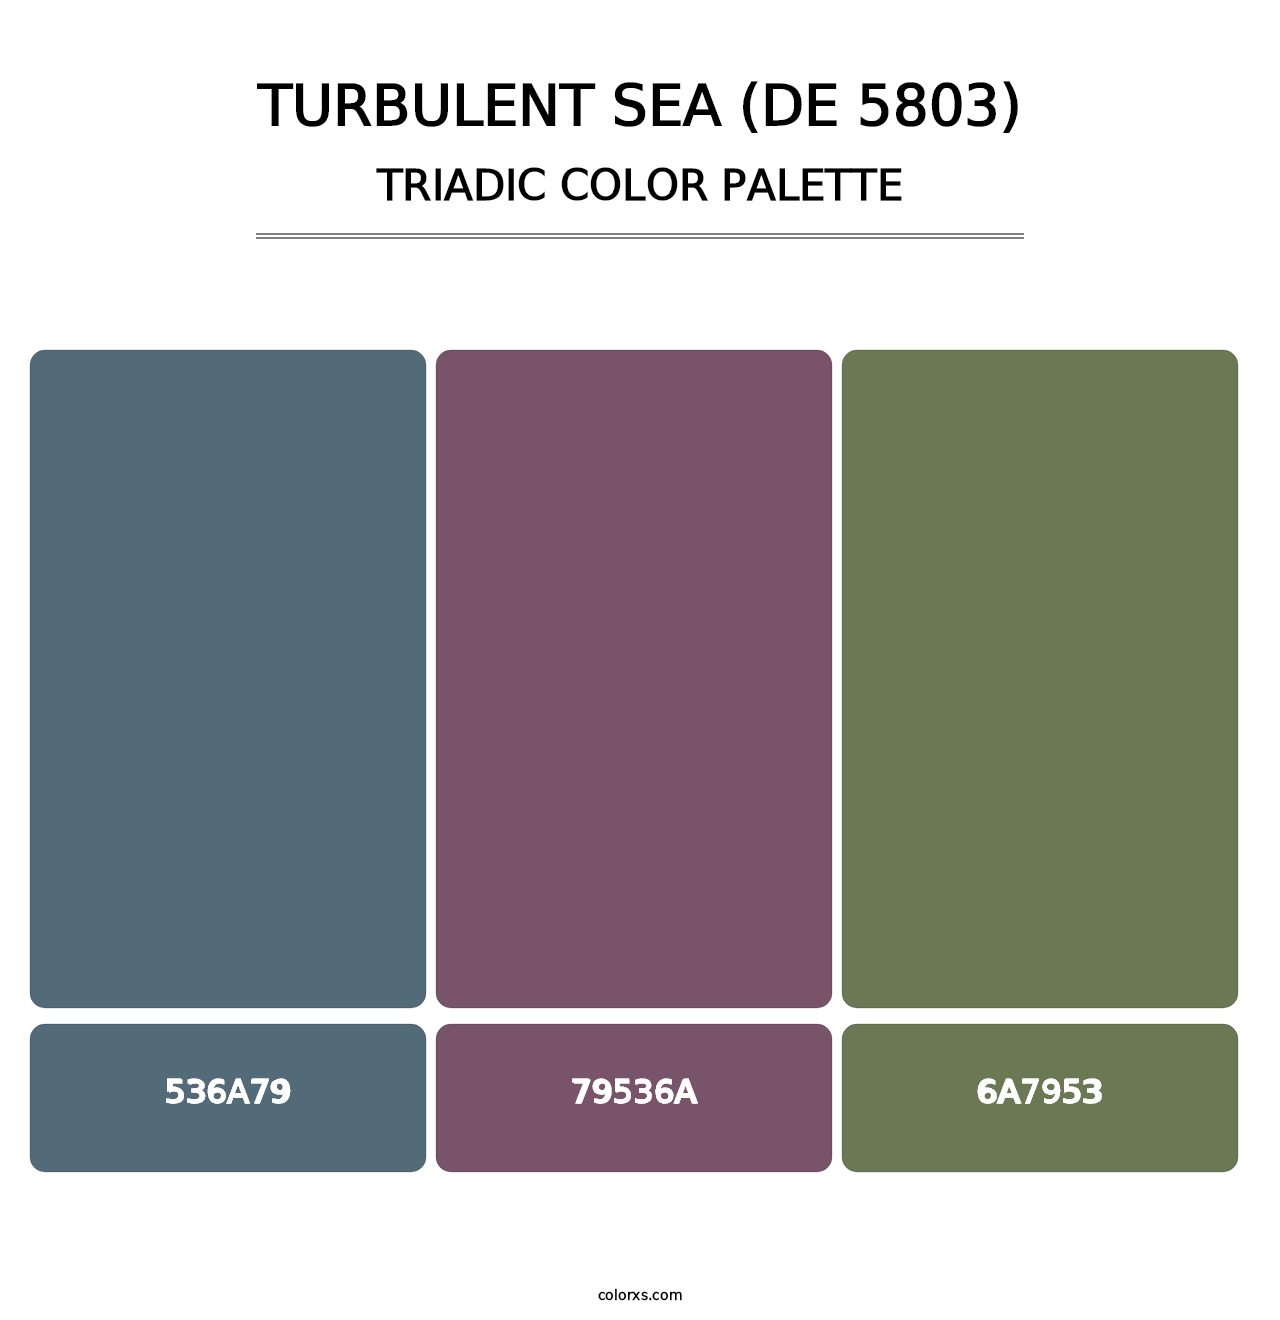 Turbulent Sea (DE 5803) - Triadic Color Palette